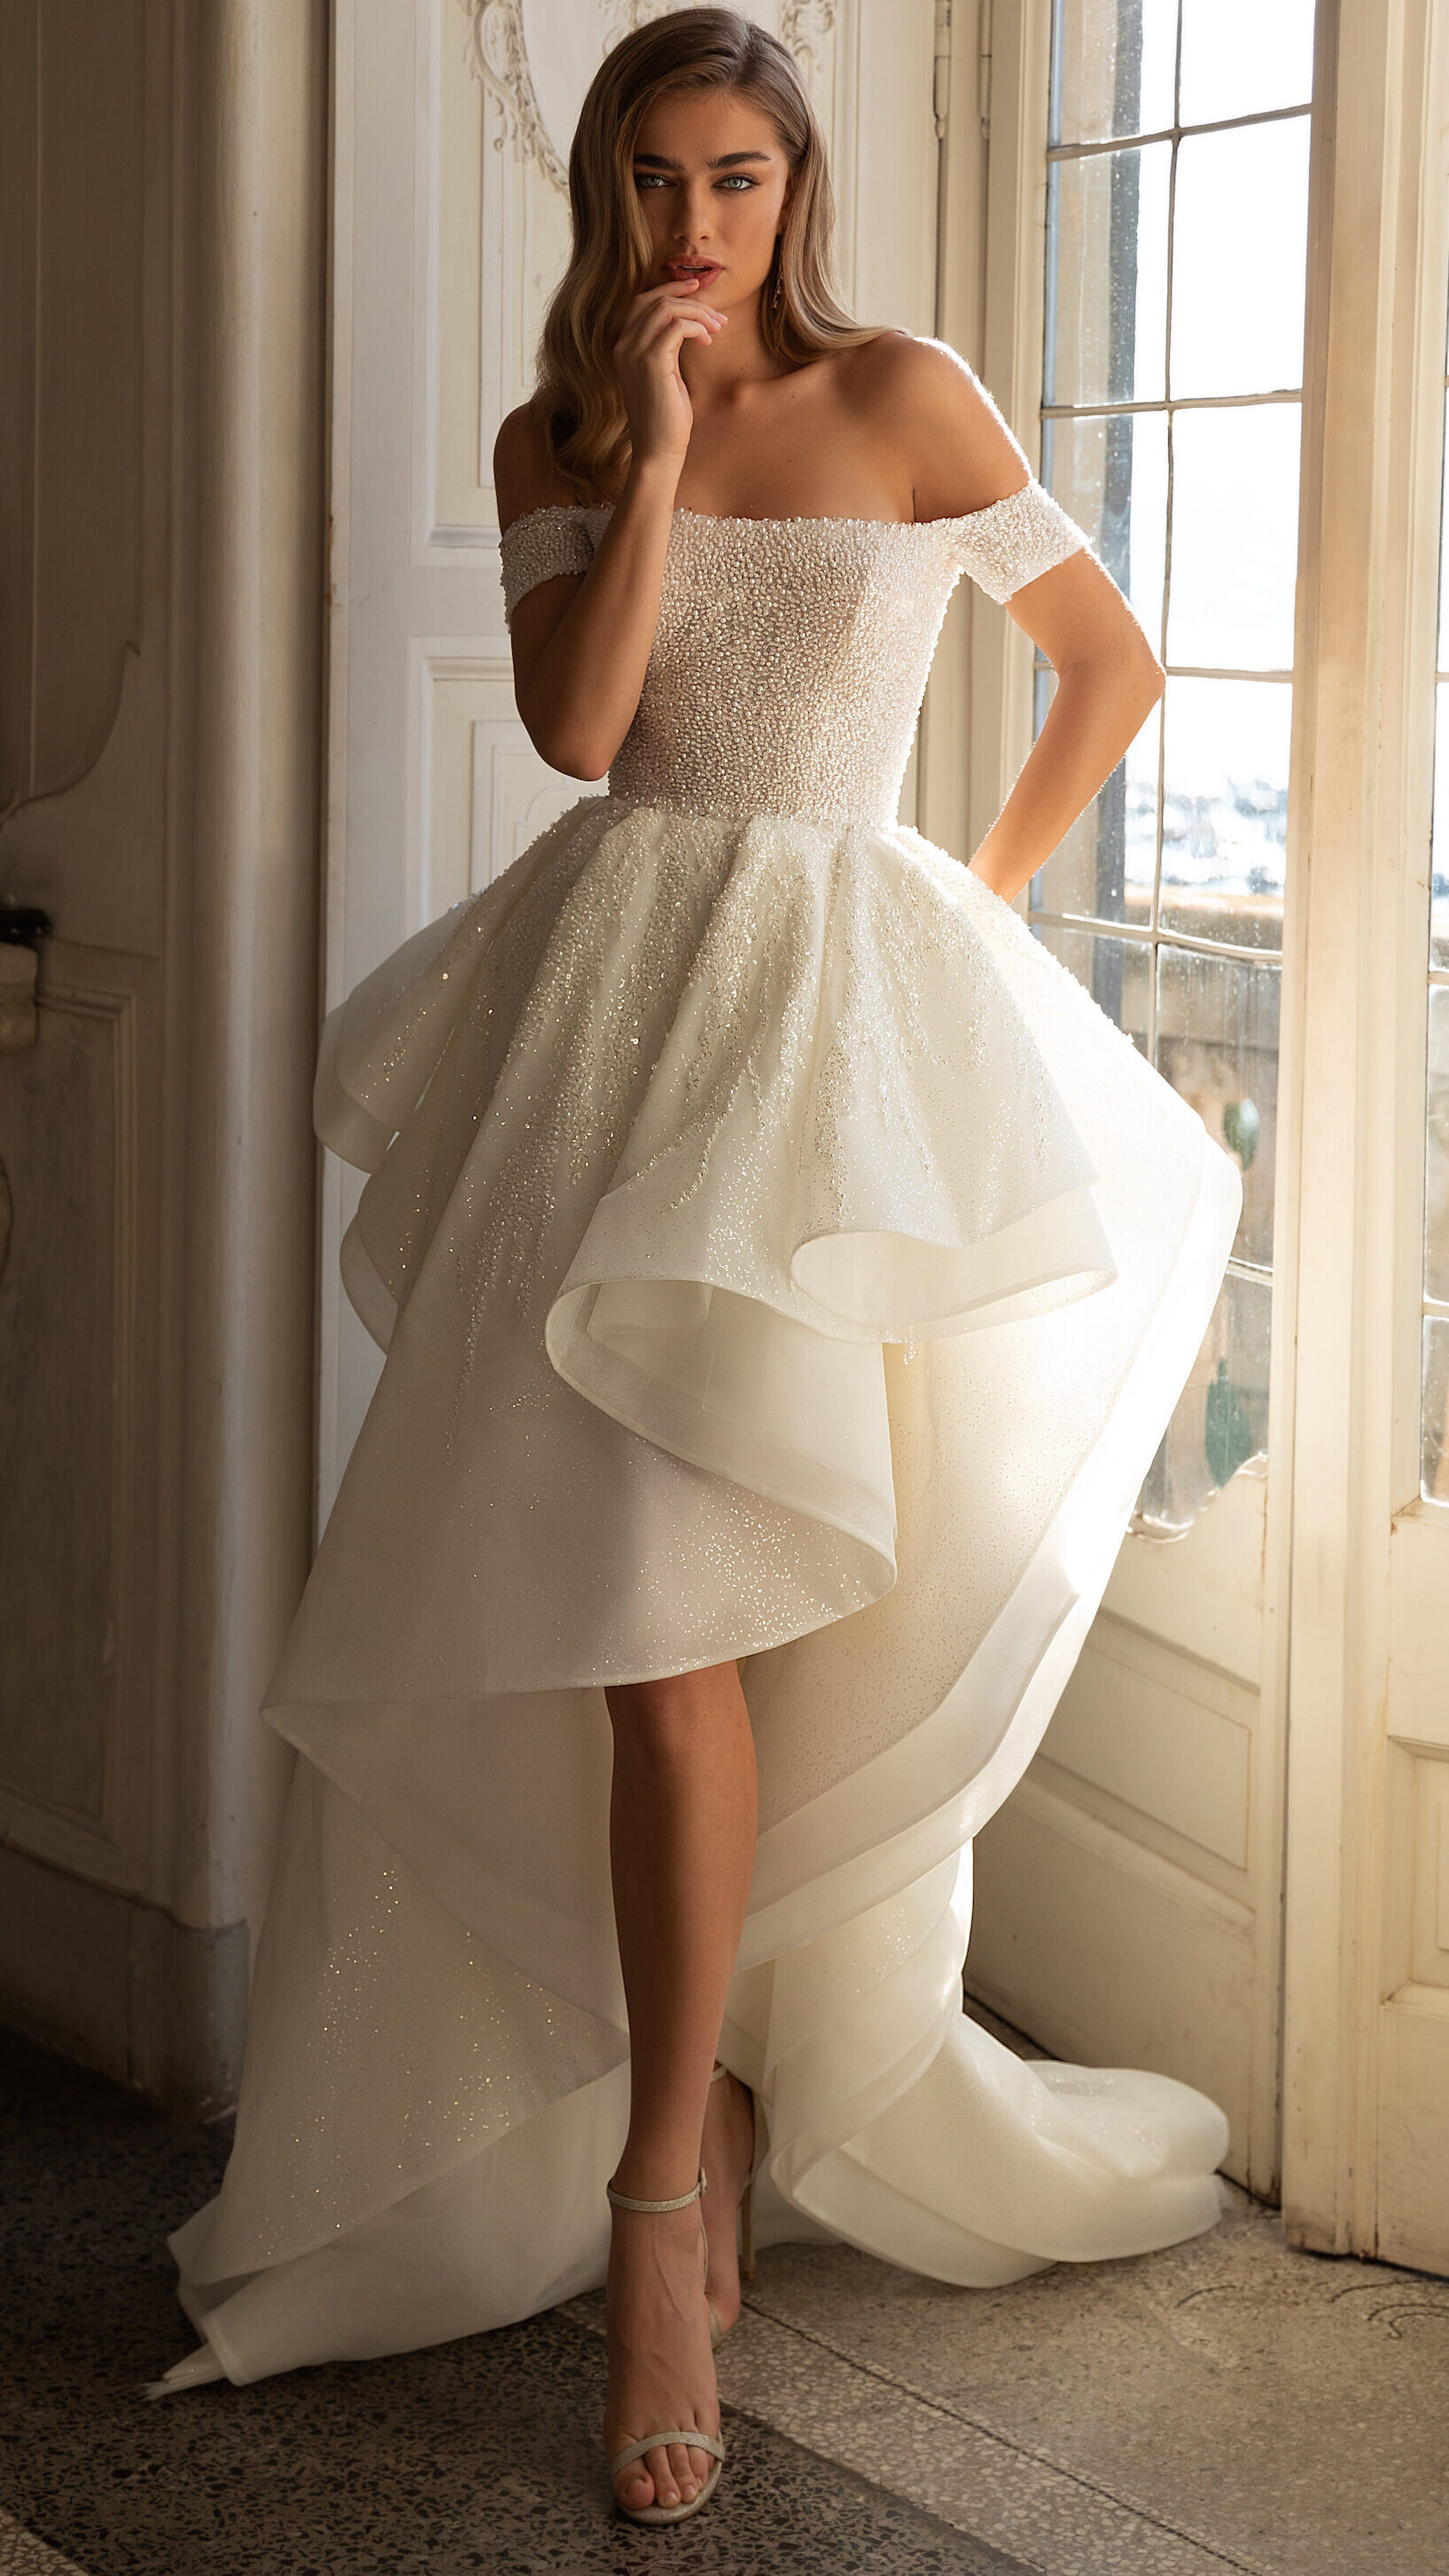 Off the shoulder short wedding dress with ruffles - Pollardi 2023 - Ornella